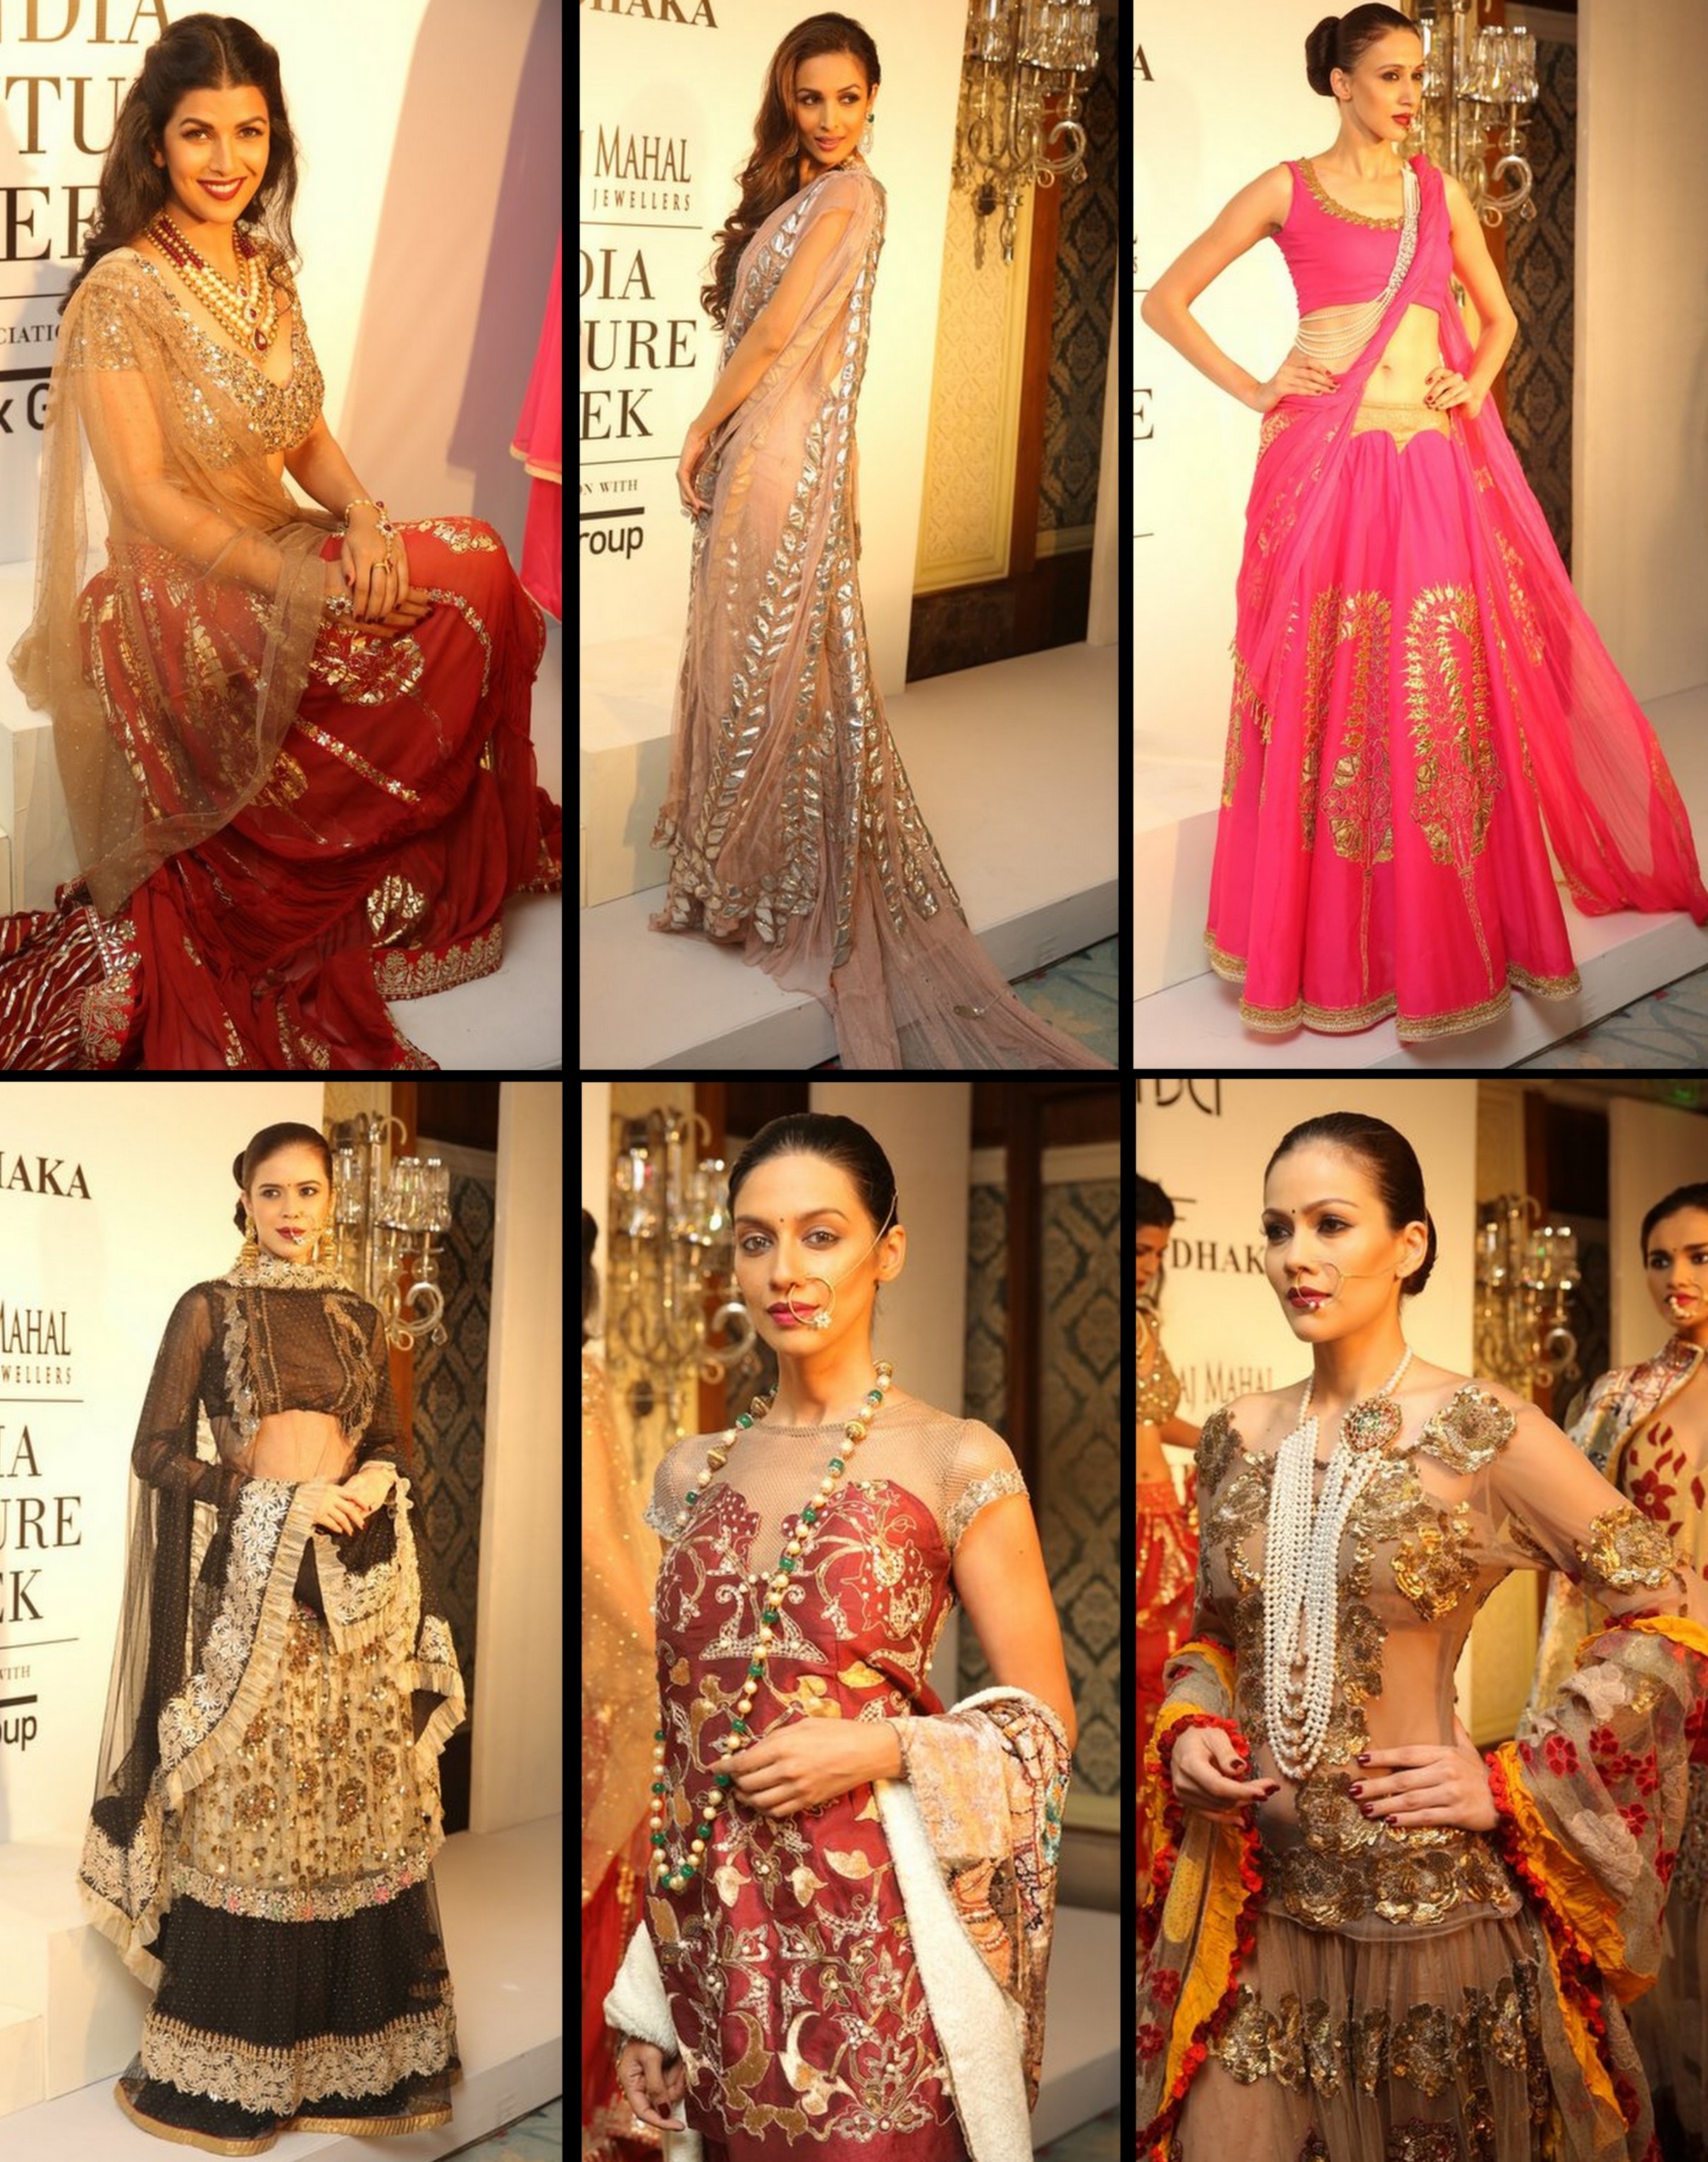 Rina Dhaka's collection at ICW 2014